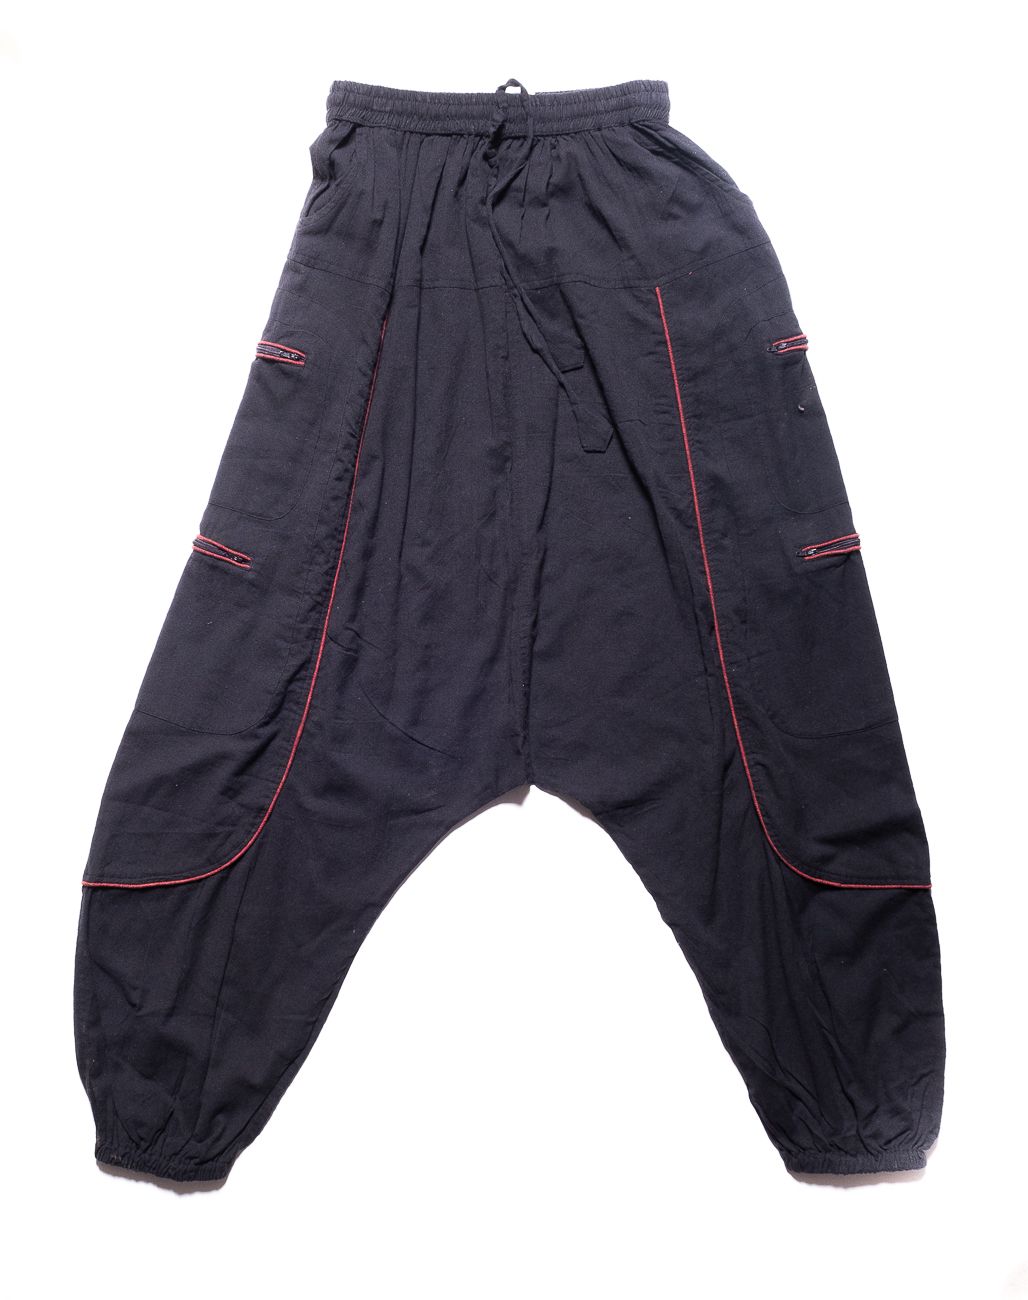 UNISEX turecké kalhoty RAMA z Nepálu z lehčího materiálu - NT0053-28B-015 KENAVI